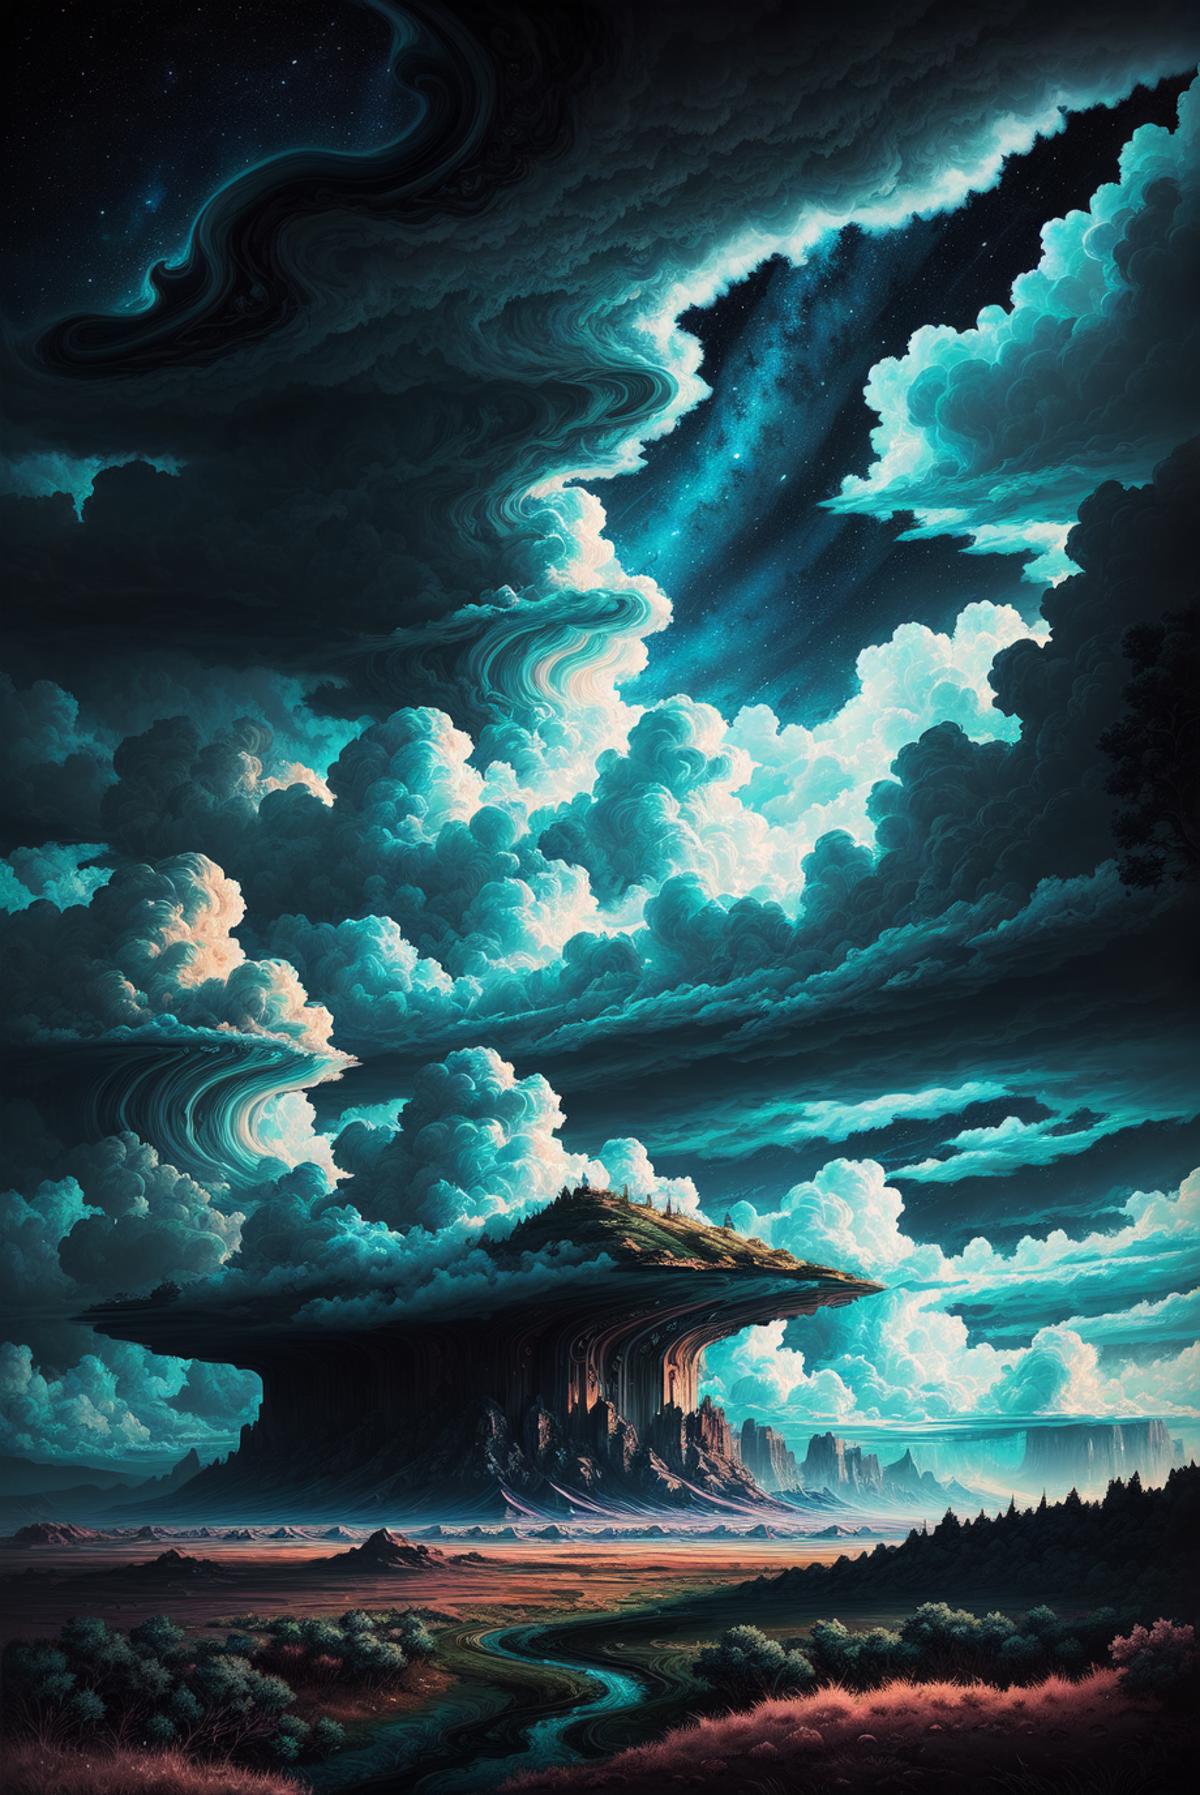 Jupiter clouds illustration by Dan Mumford, alien landscape and vegetation, epic scene, lots of swirling clouds, high expo...